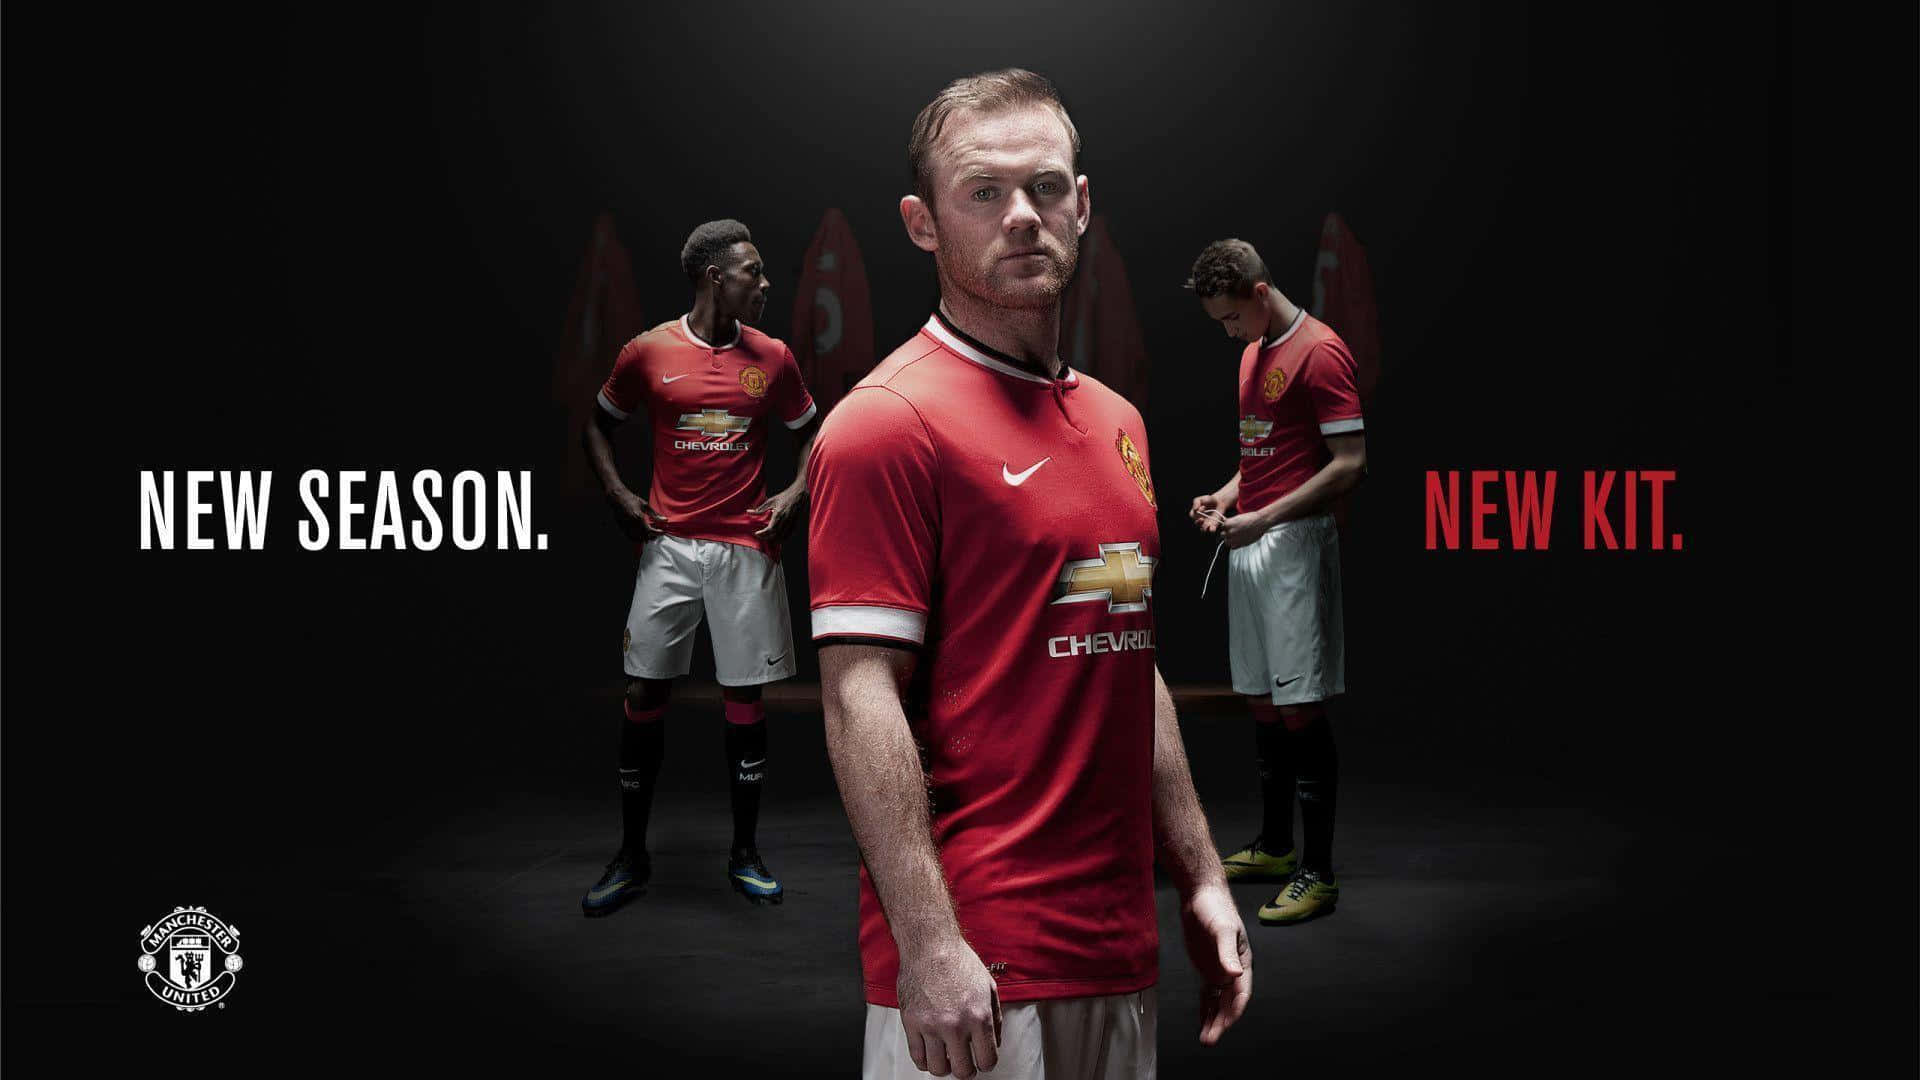 Professional Footbal Player Wayne Rooney